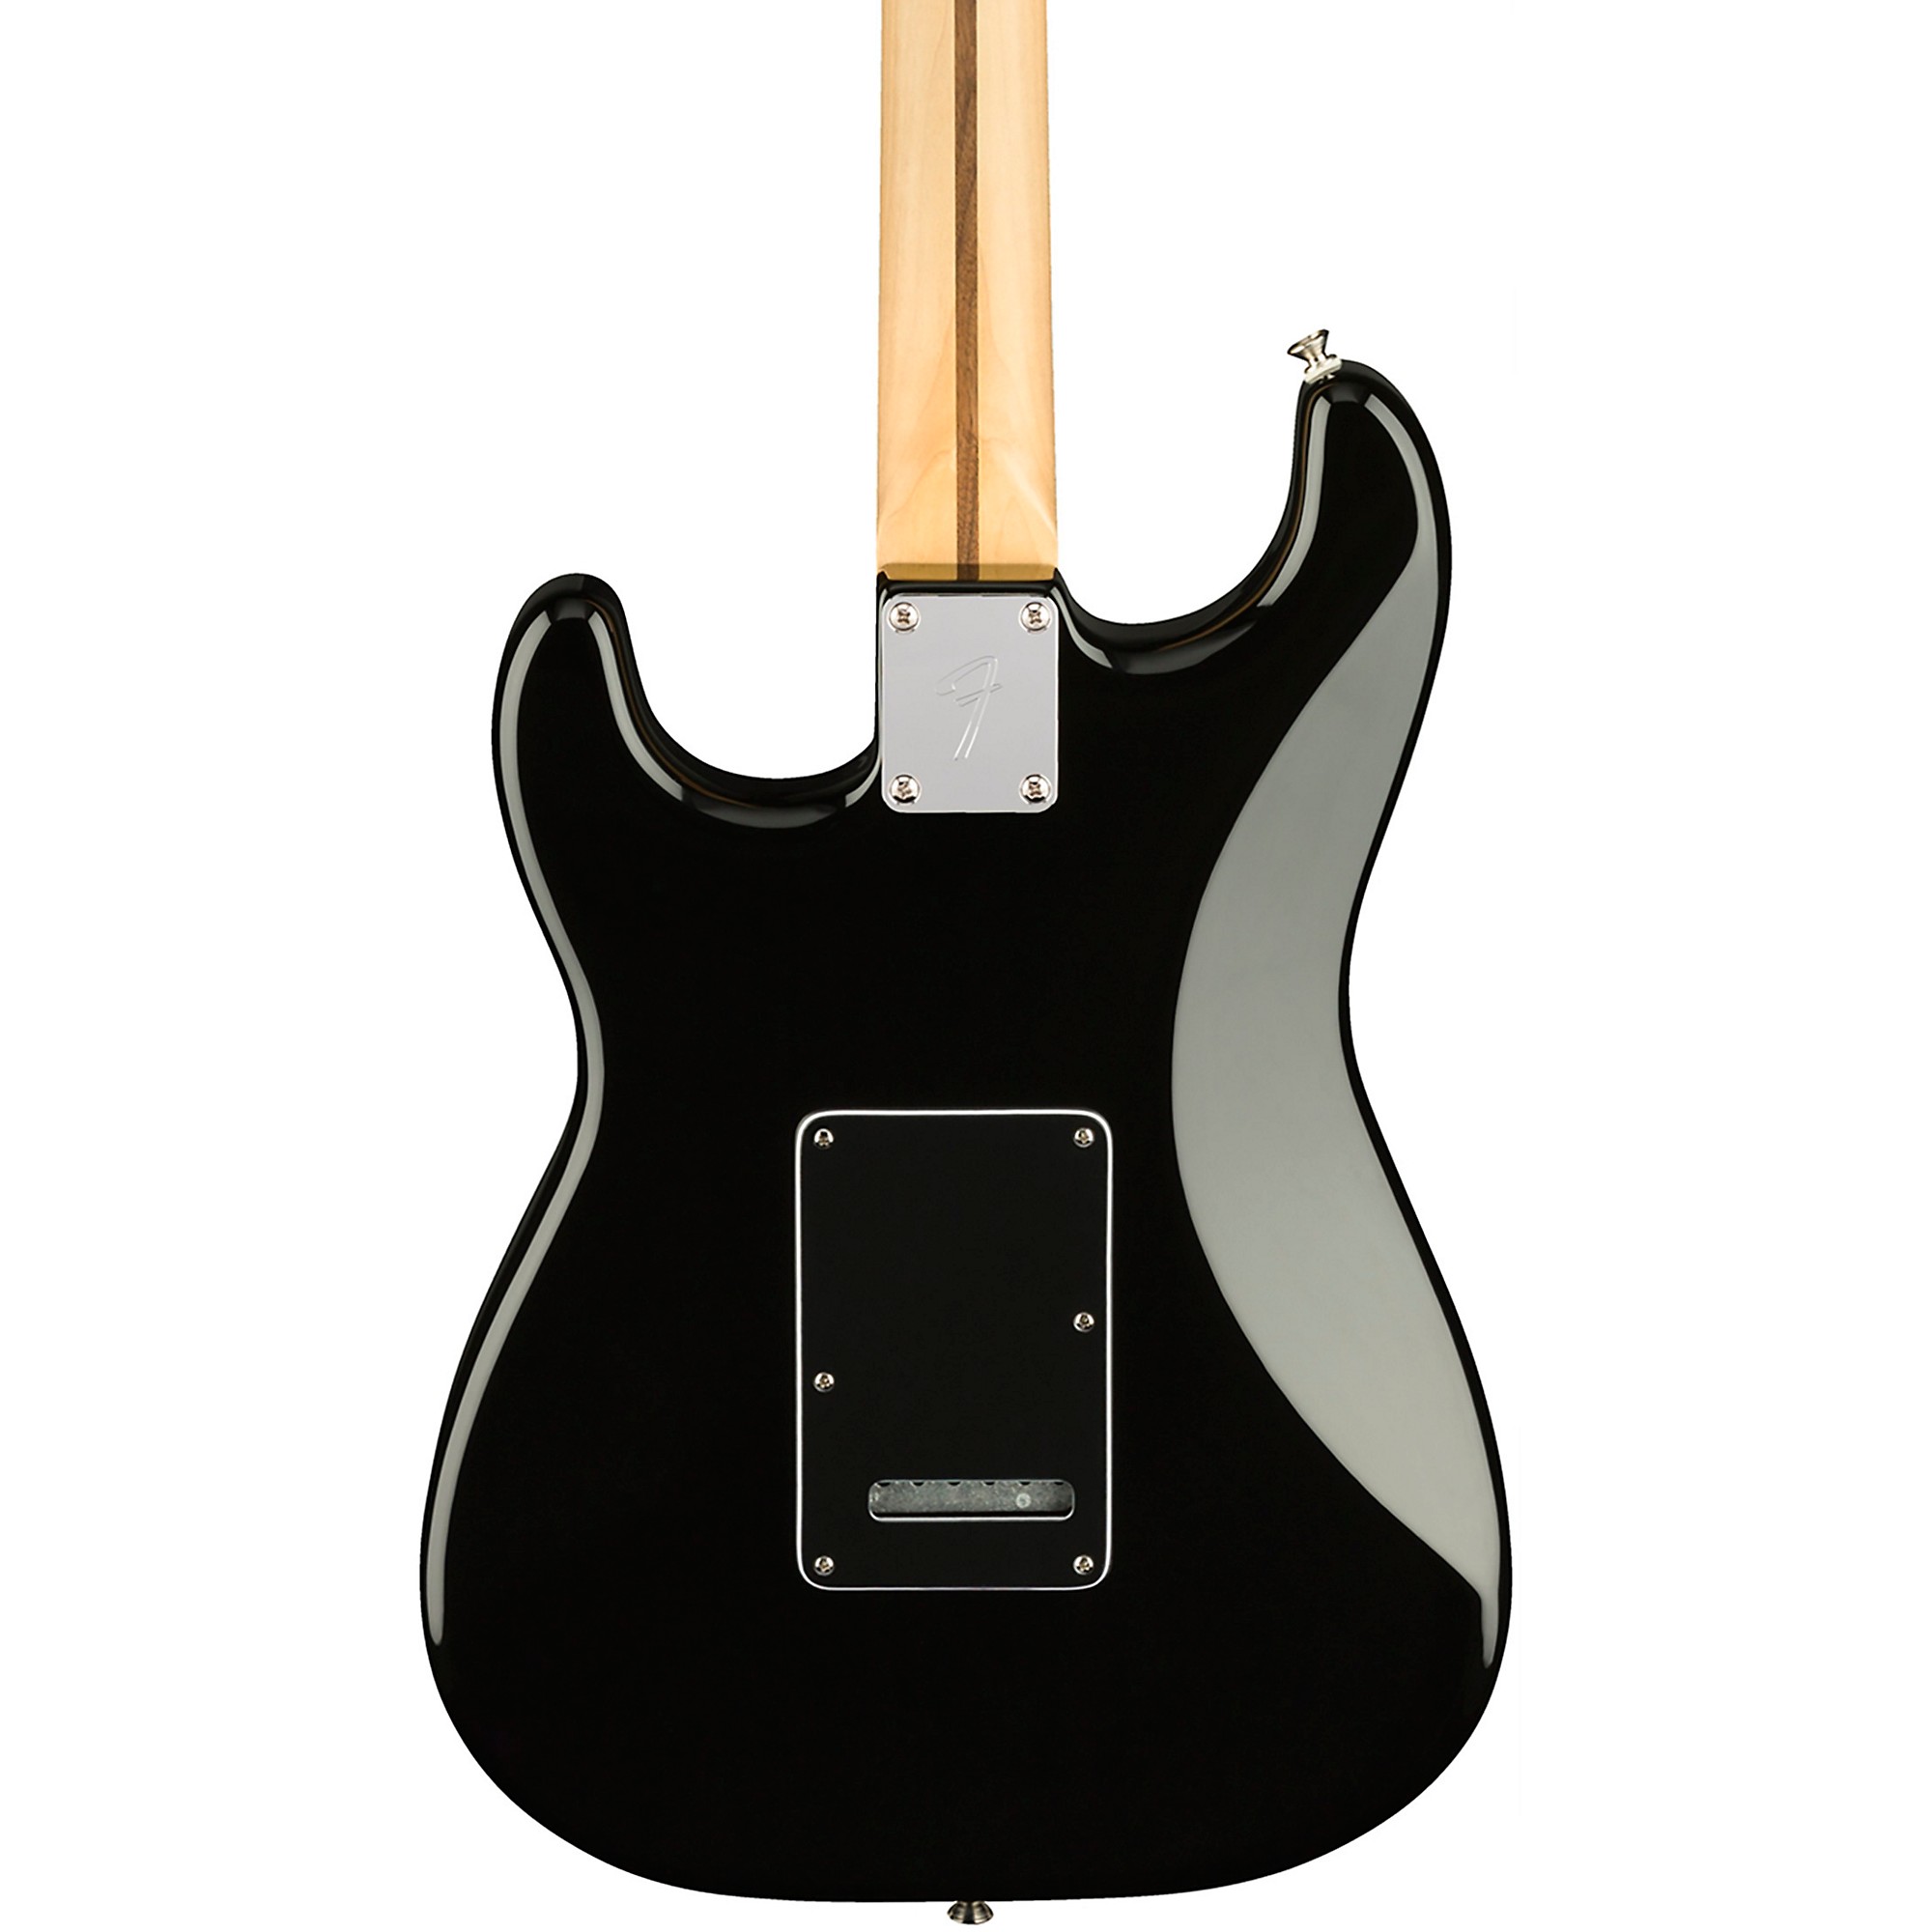 FENDER Limited Player Stratocaster Black, Gold Hardware, Maple